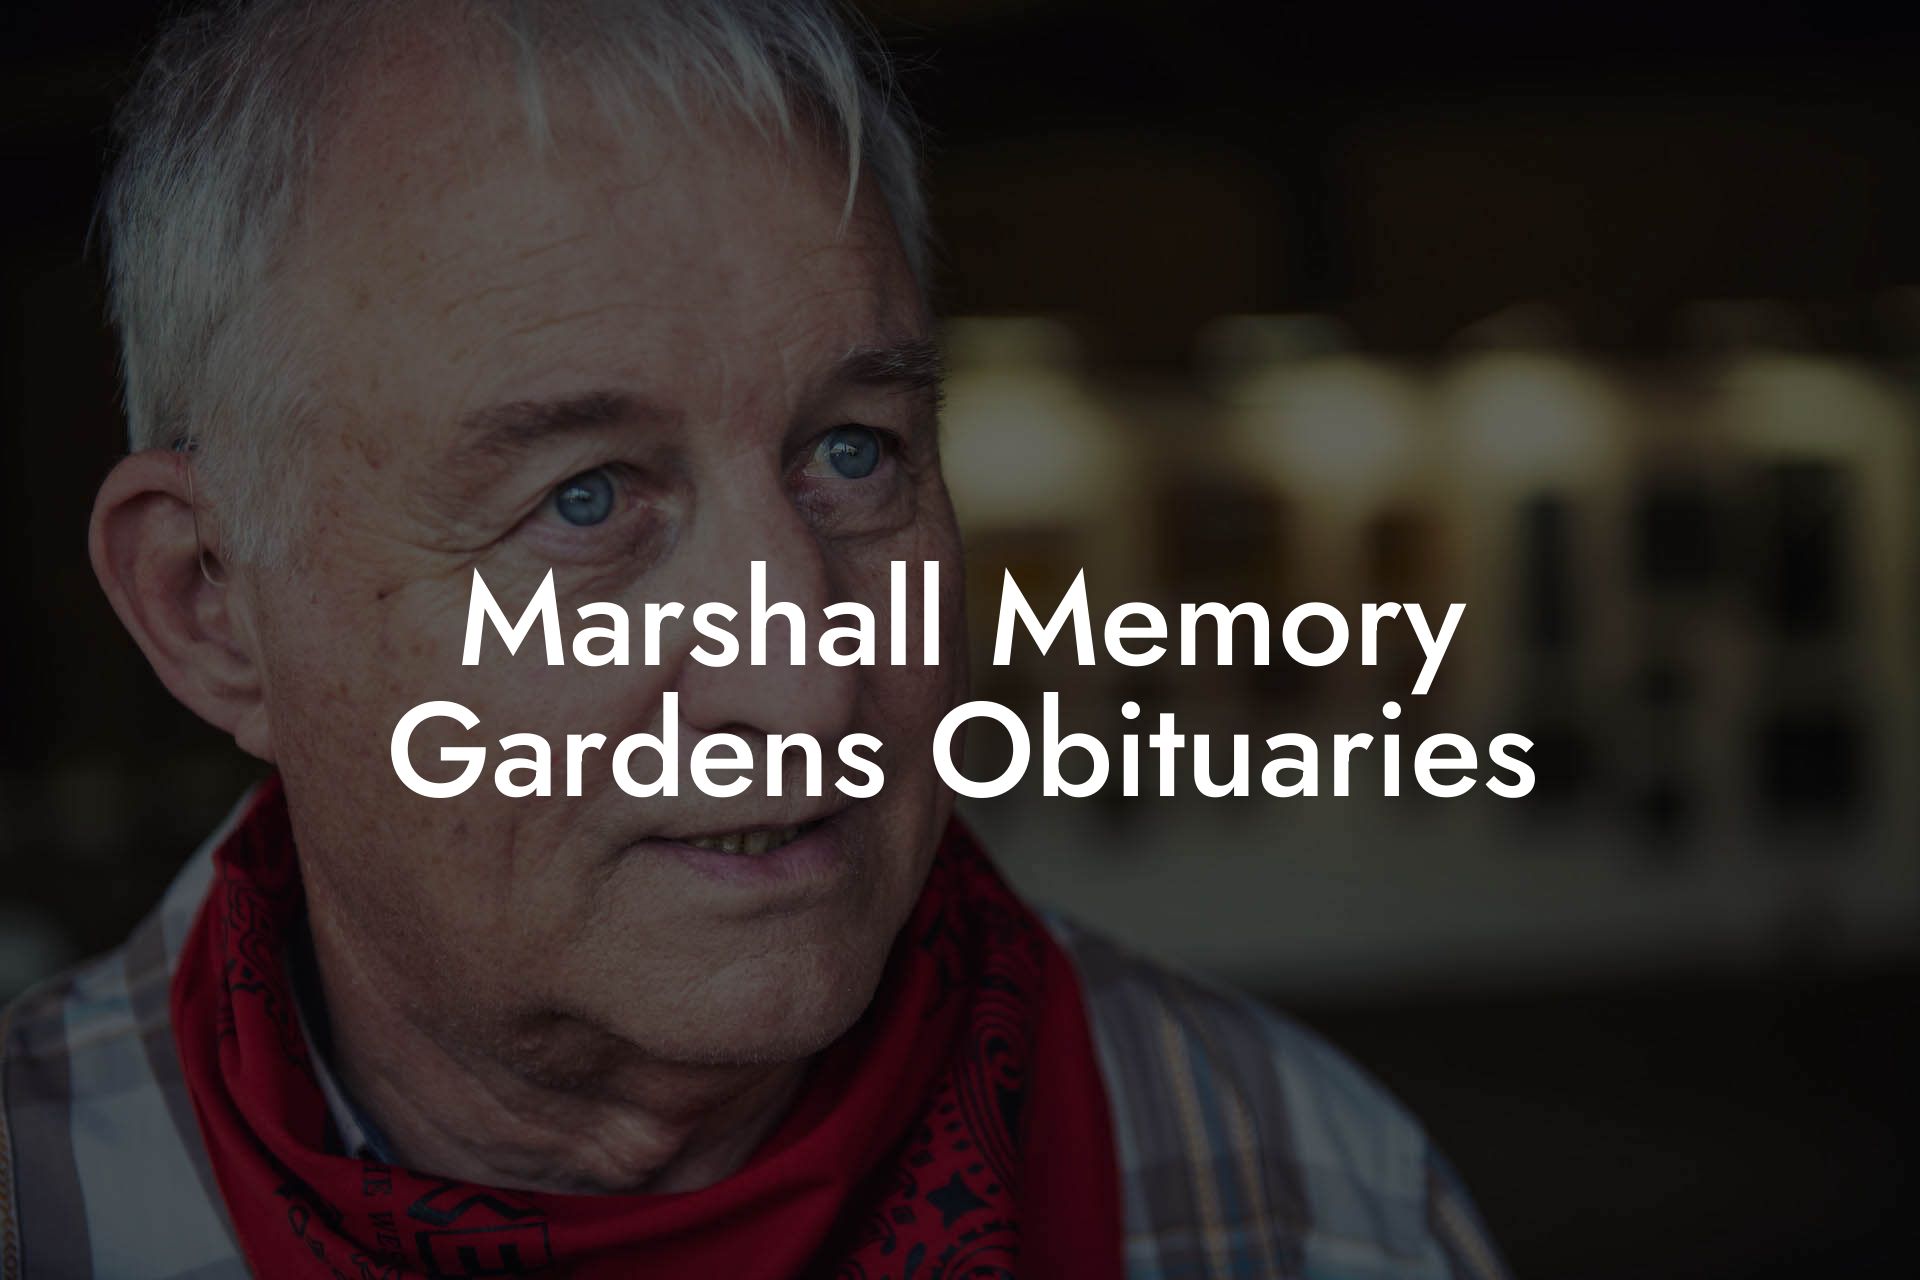 Marshall Memory Gardens Obituaries